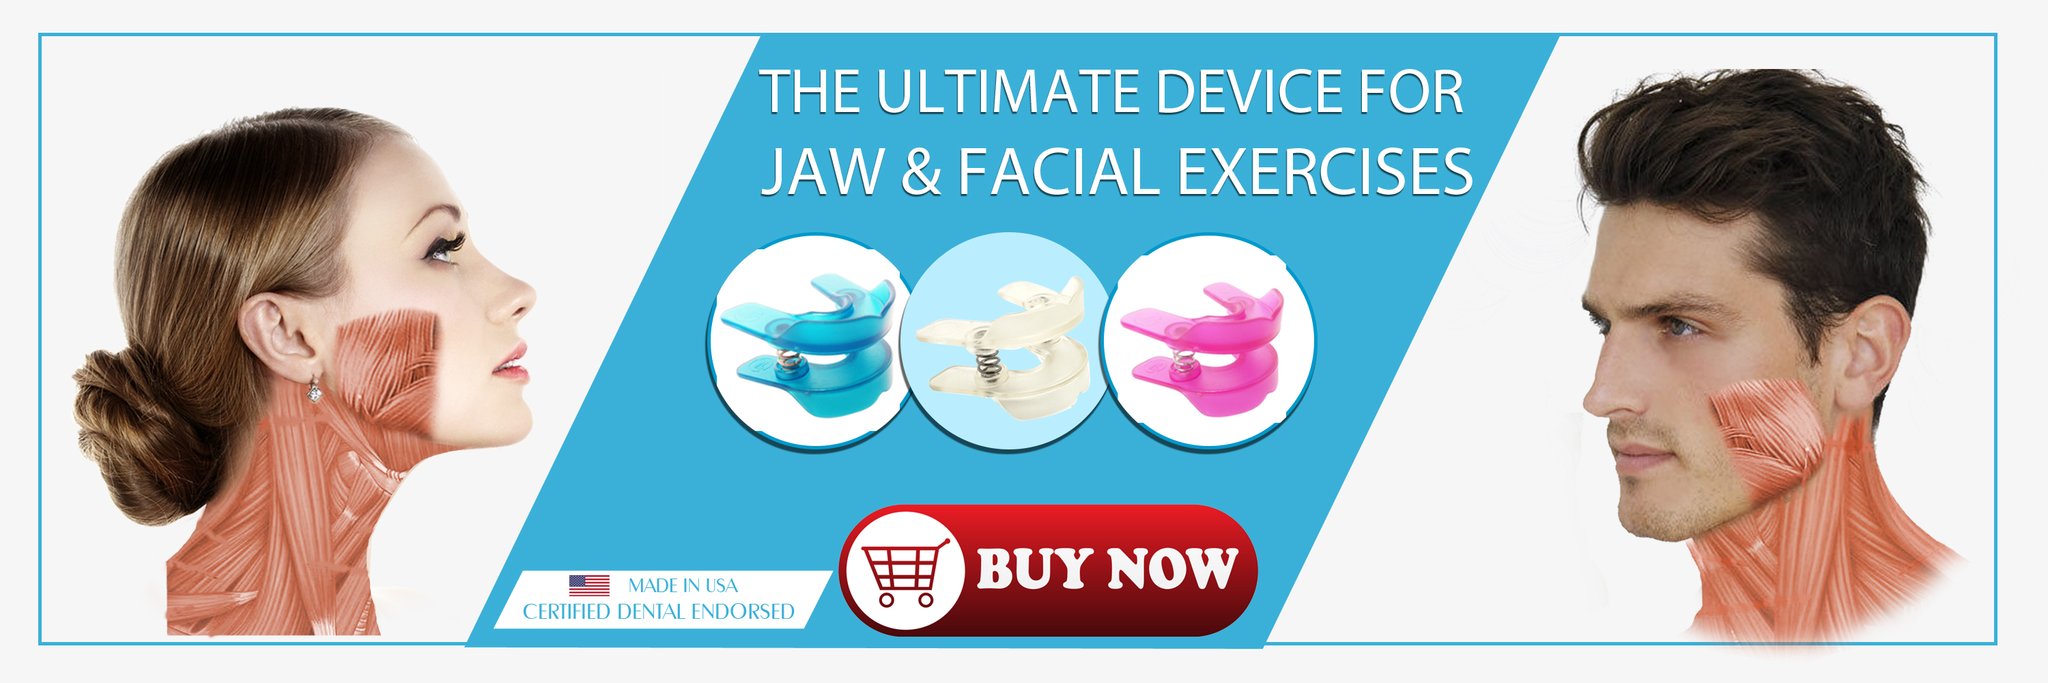 JawFlex Jawline Exerciser & Face Exerciser for Women & Men